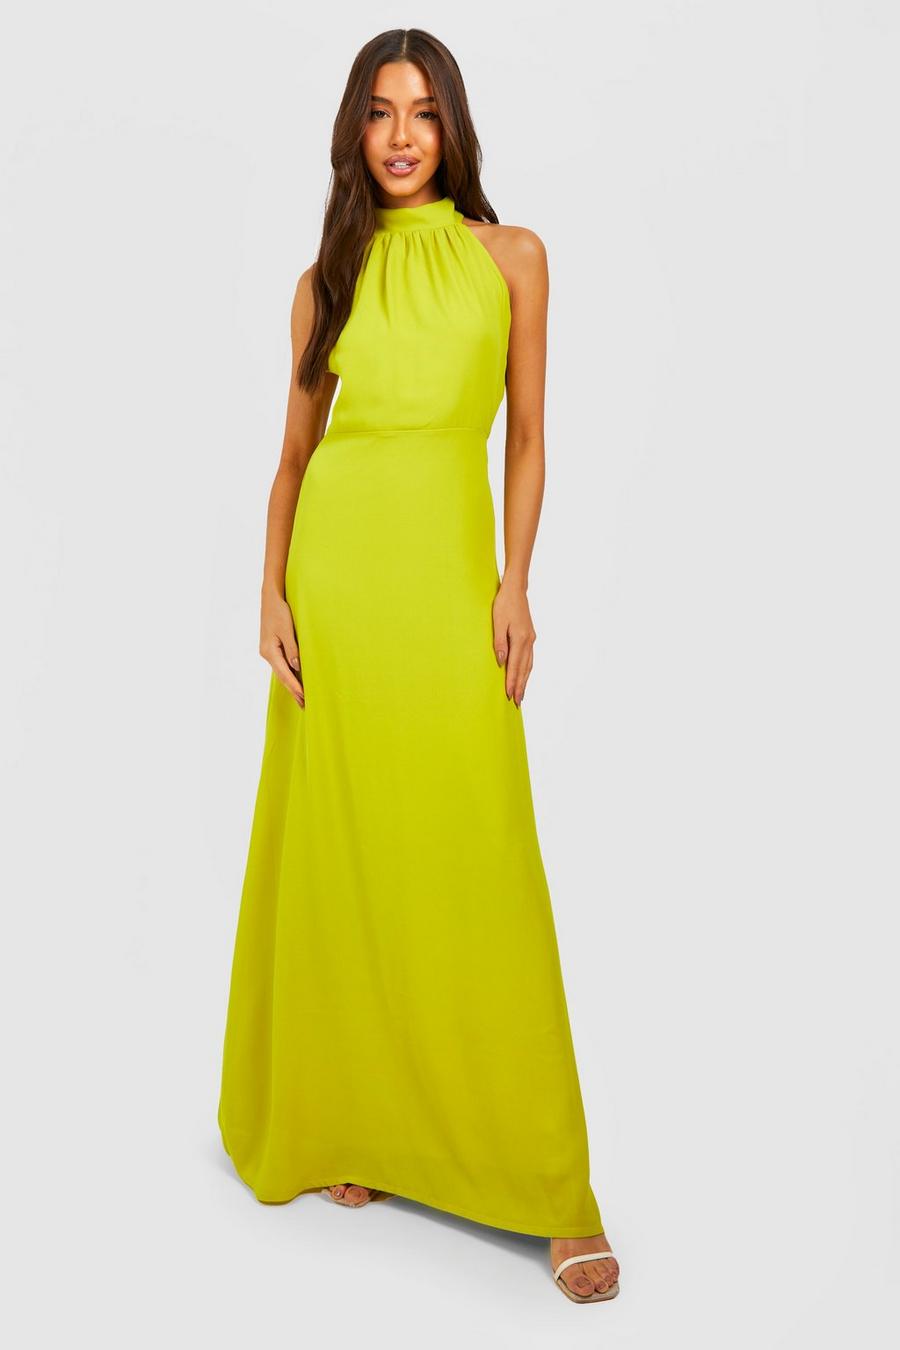 Chartreuse Chiffon Halter Maxi Dress